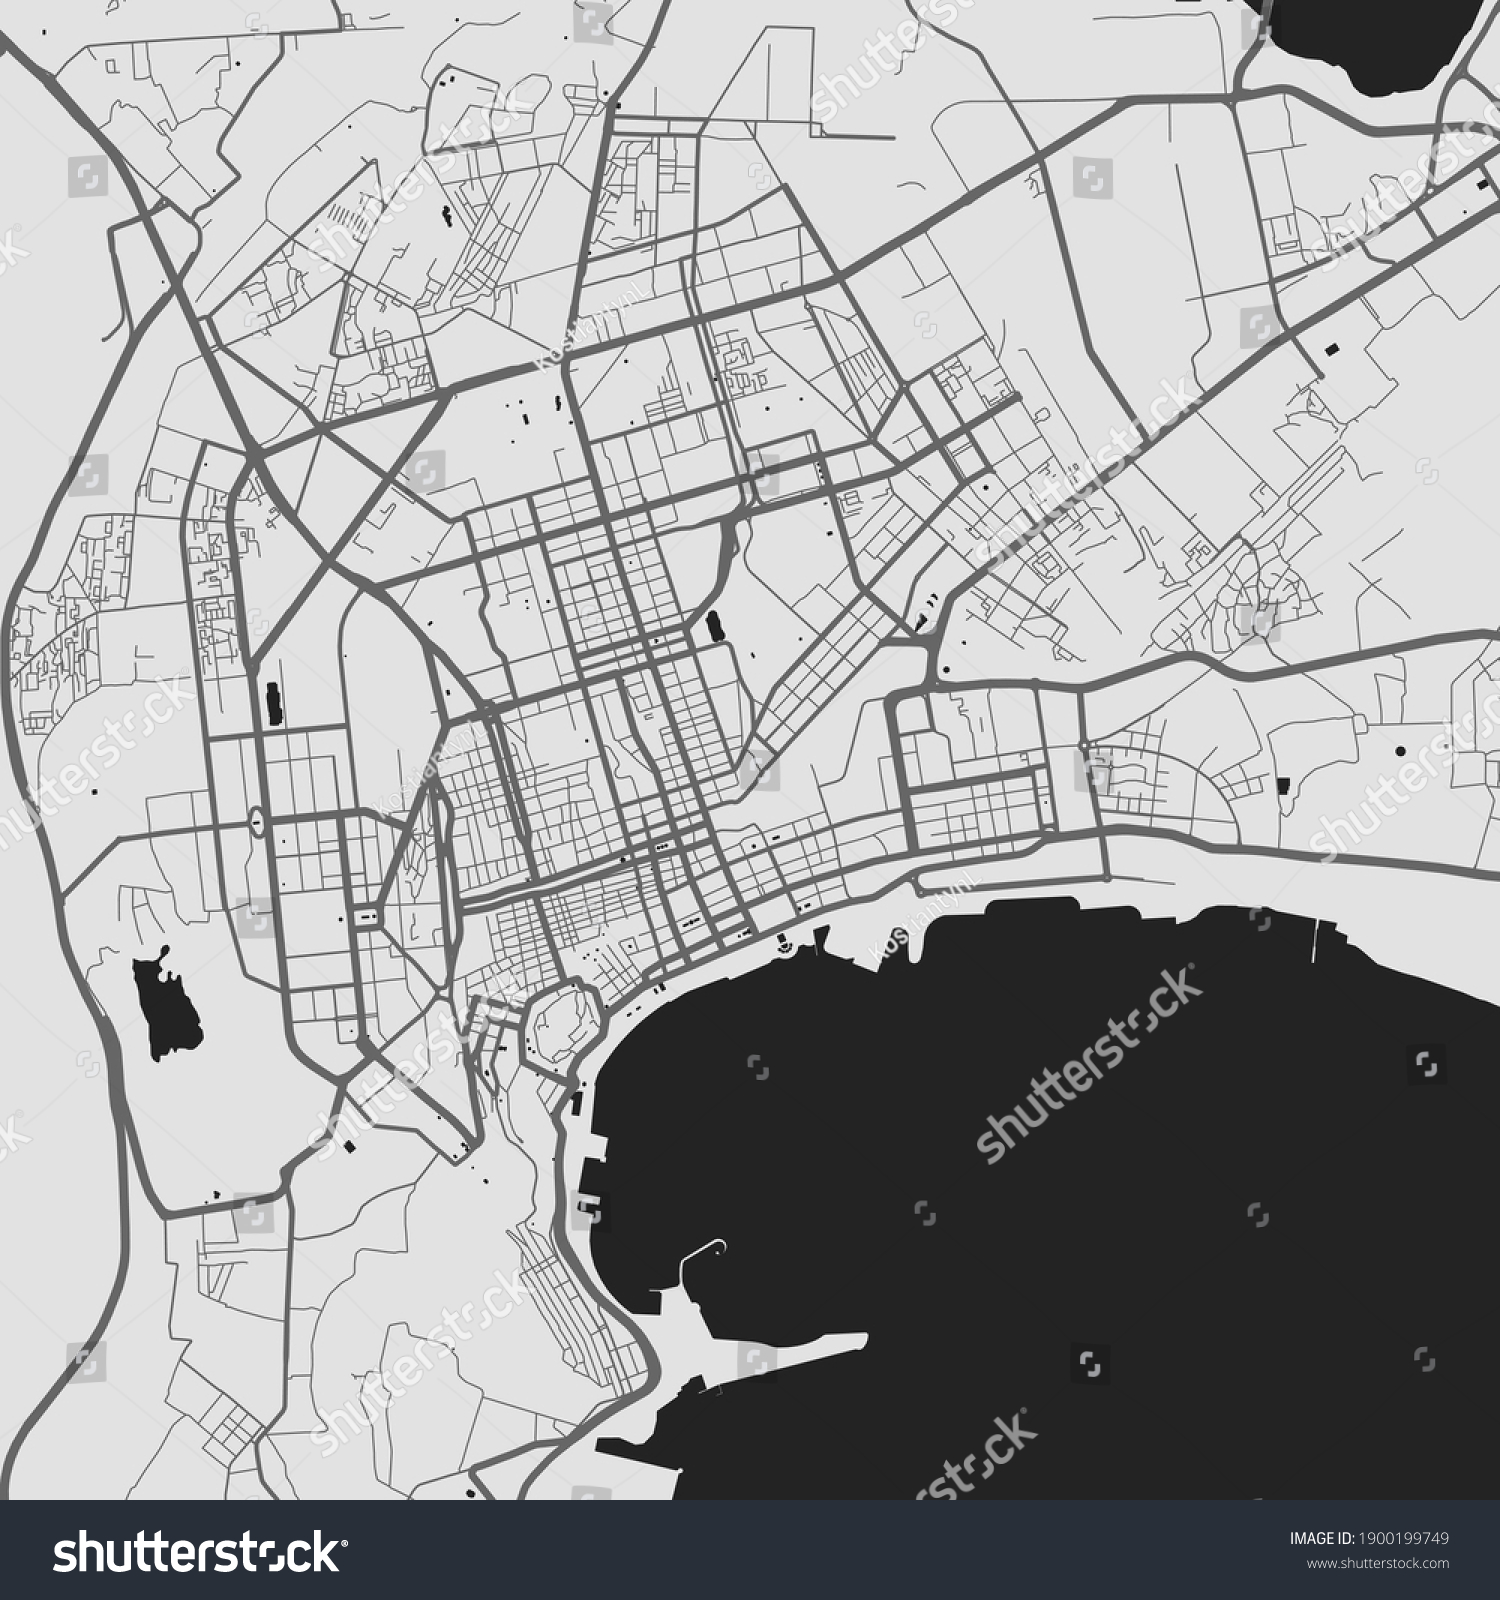 SVG of Urban city map of Baku. Vector illustration, Baku map grayscale art poster. Street map image with roads, metropolitan city area view. svg